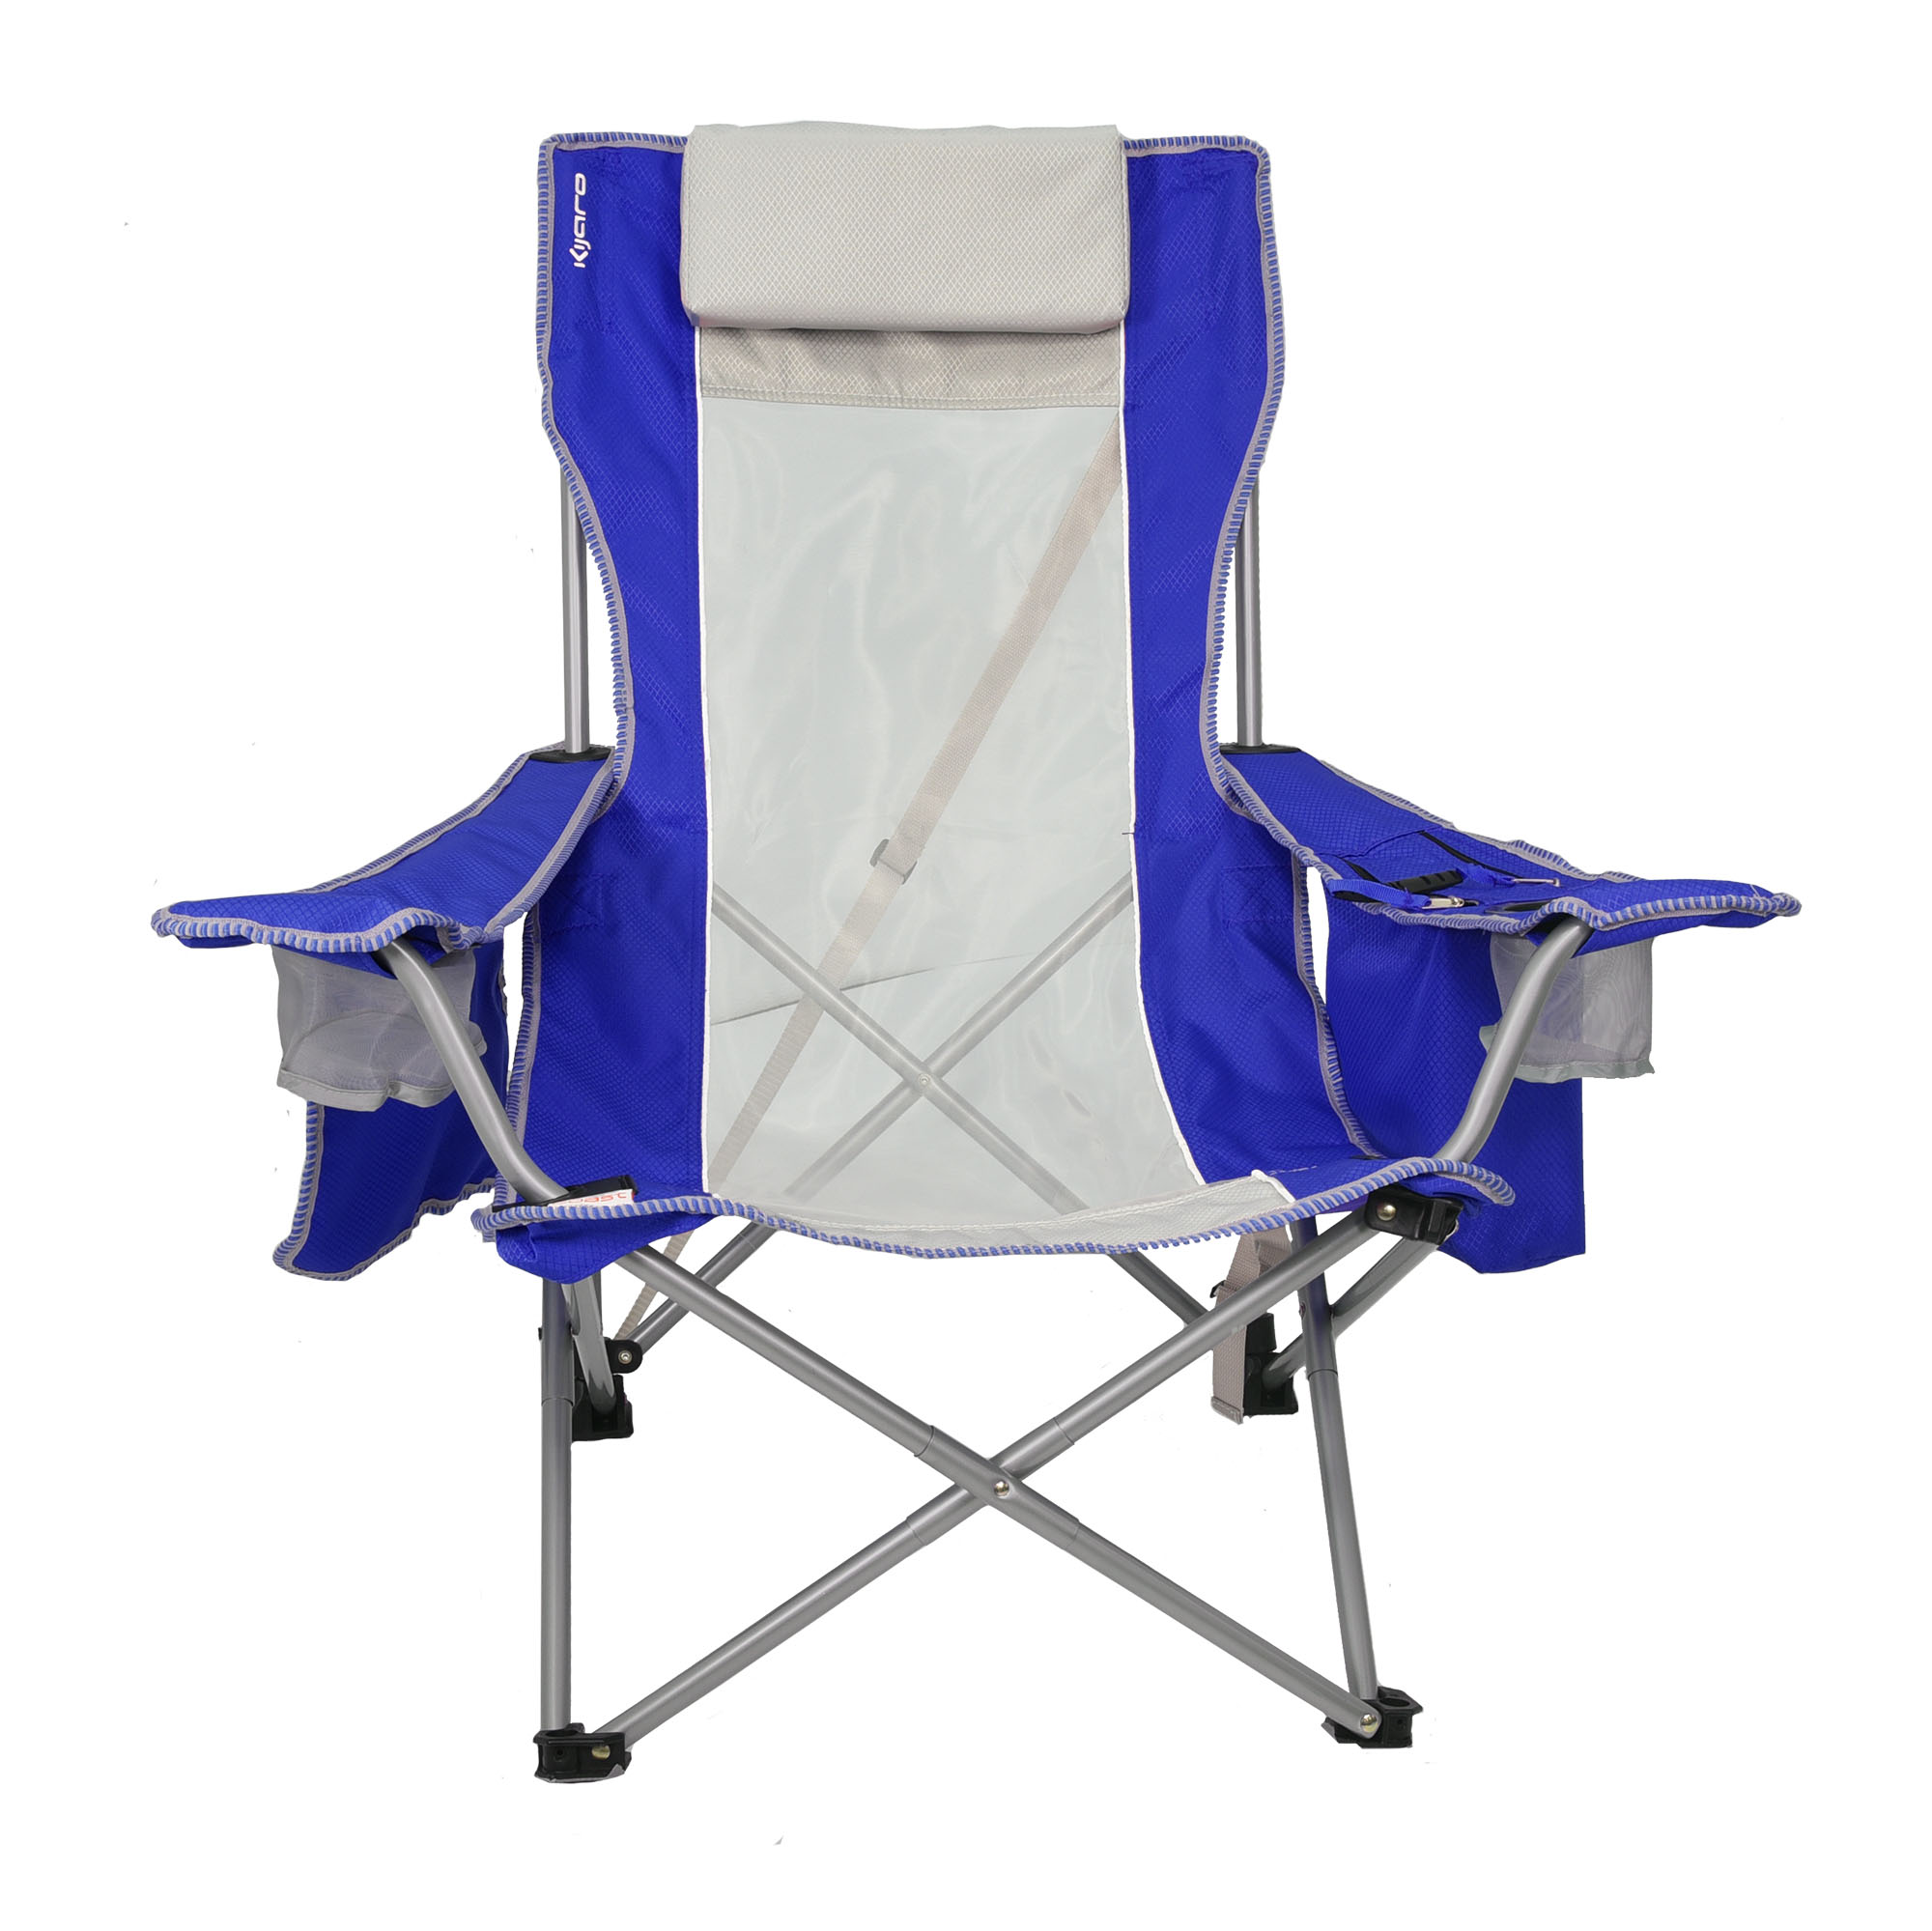 Kijaro Folding Polyester Beach Chair - Blue/Gray - image 2 of 8